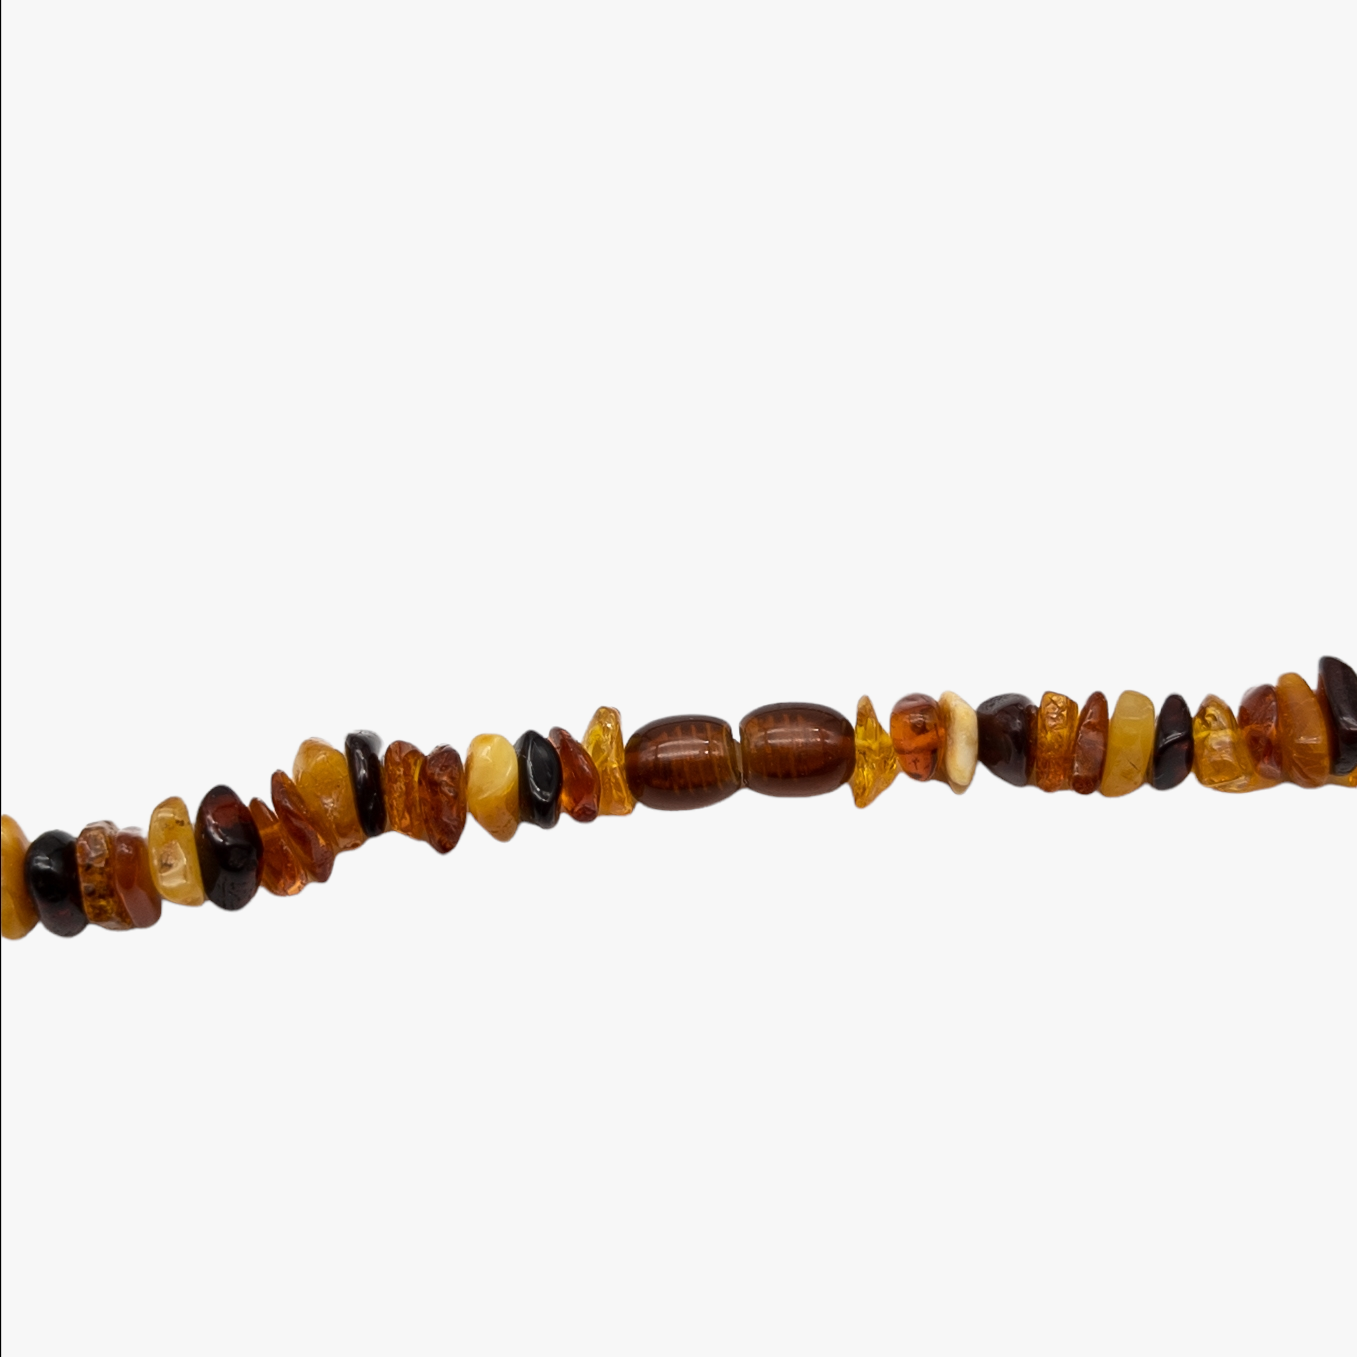 Genuine Baltic Amber Multi Color Strand Necklace